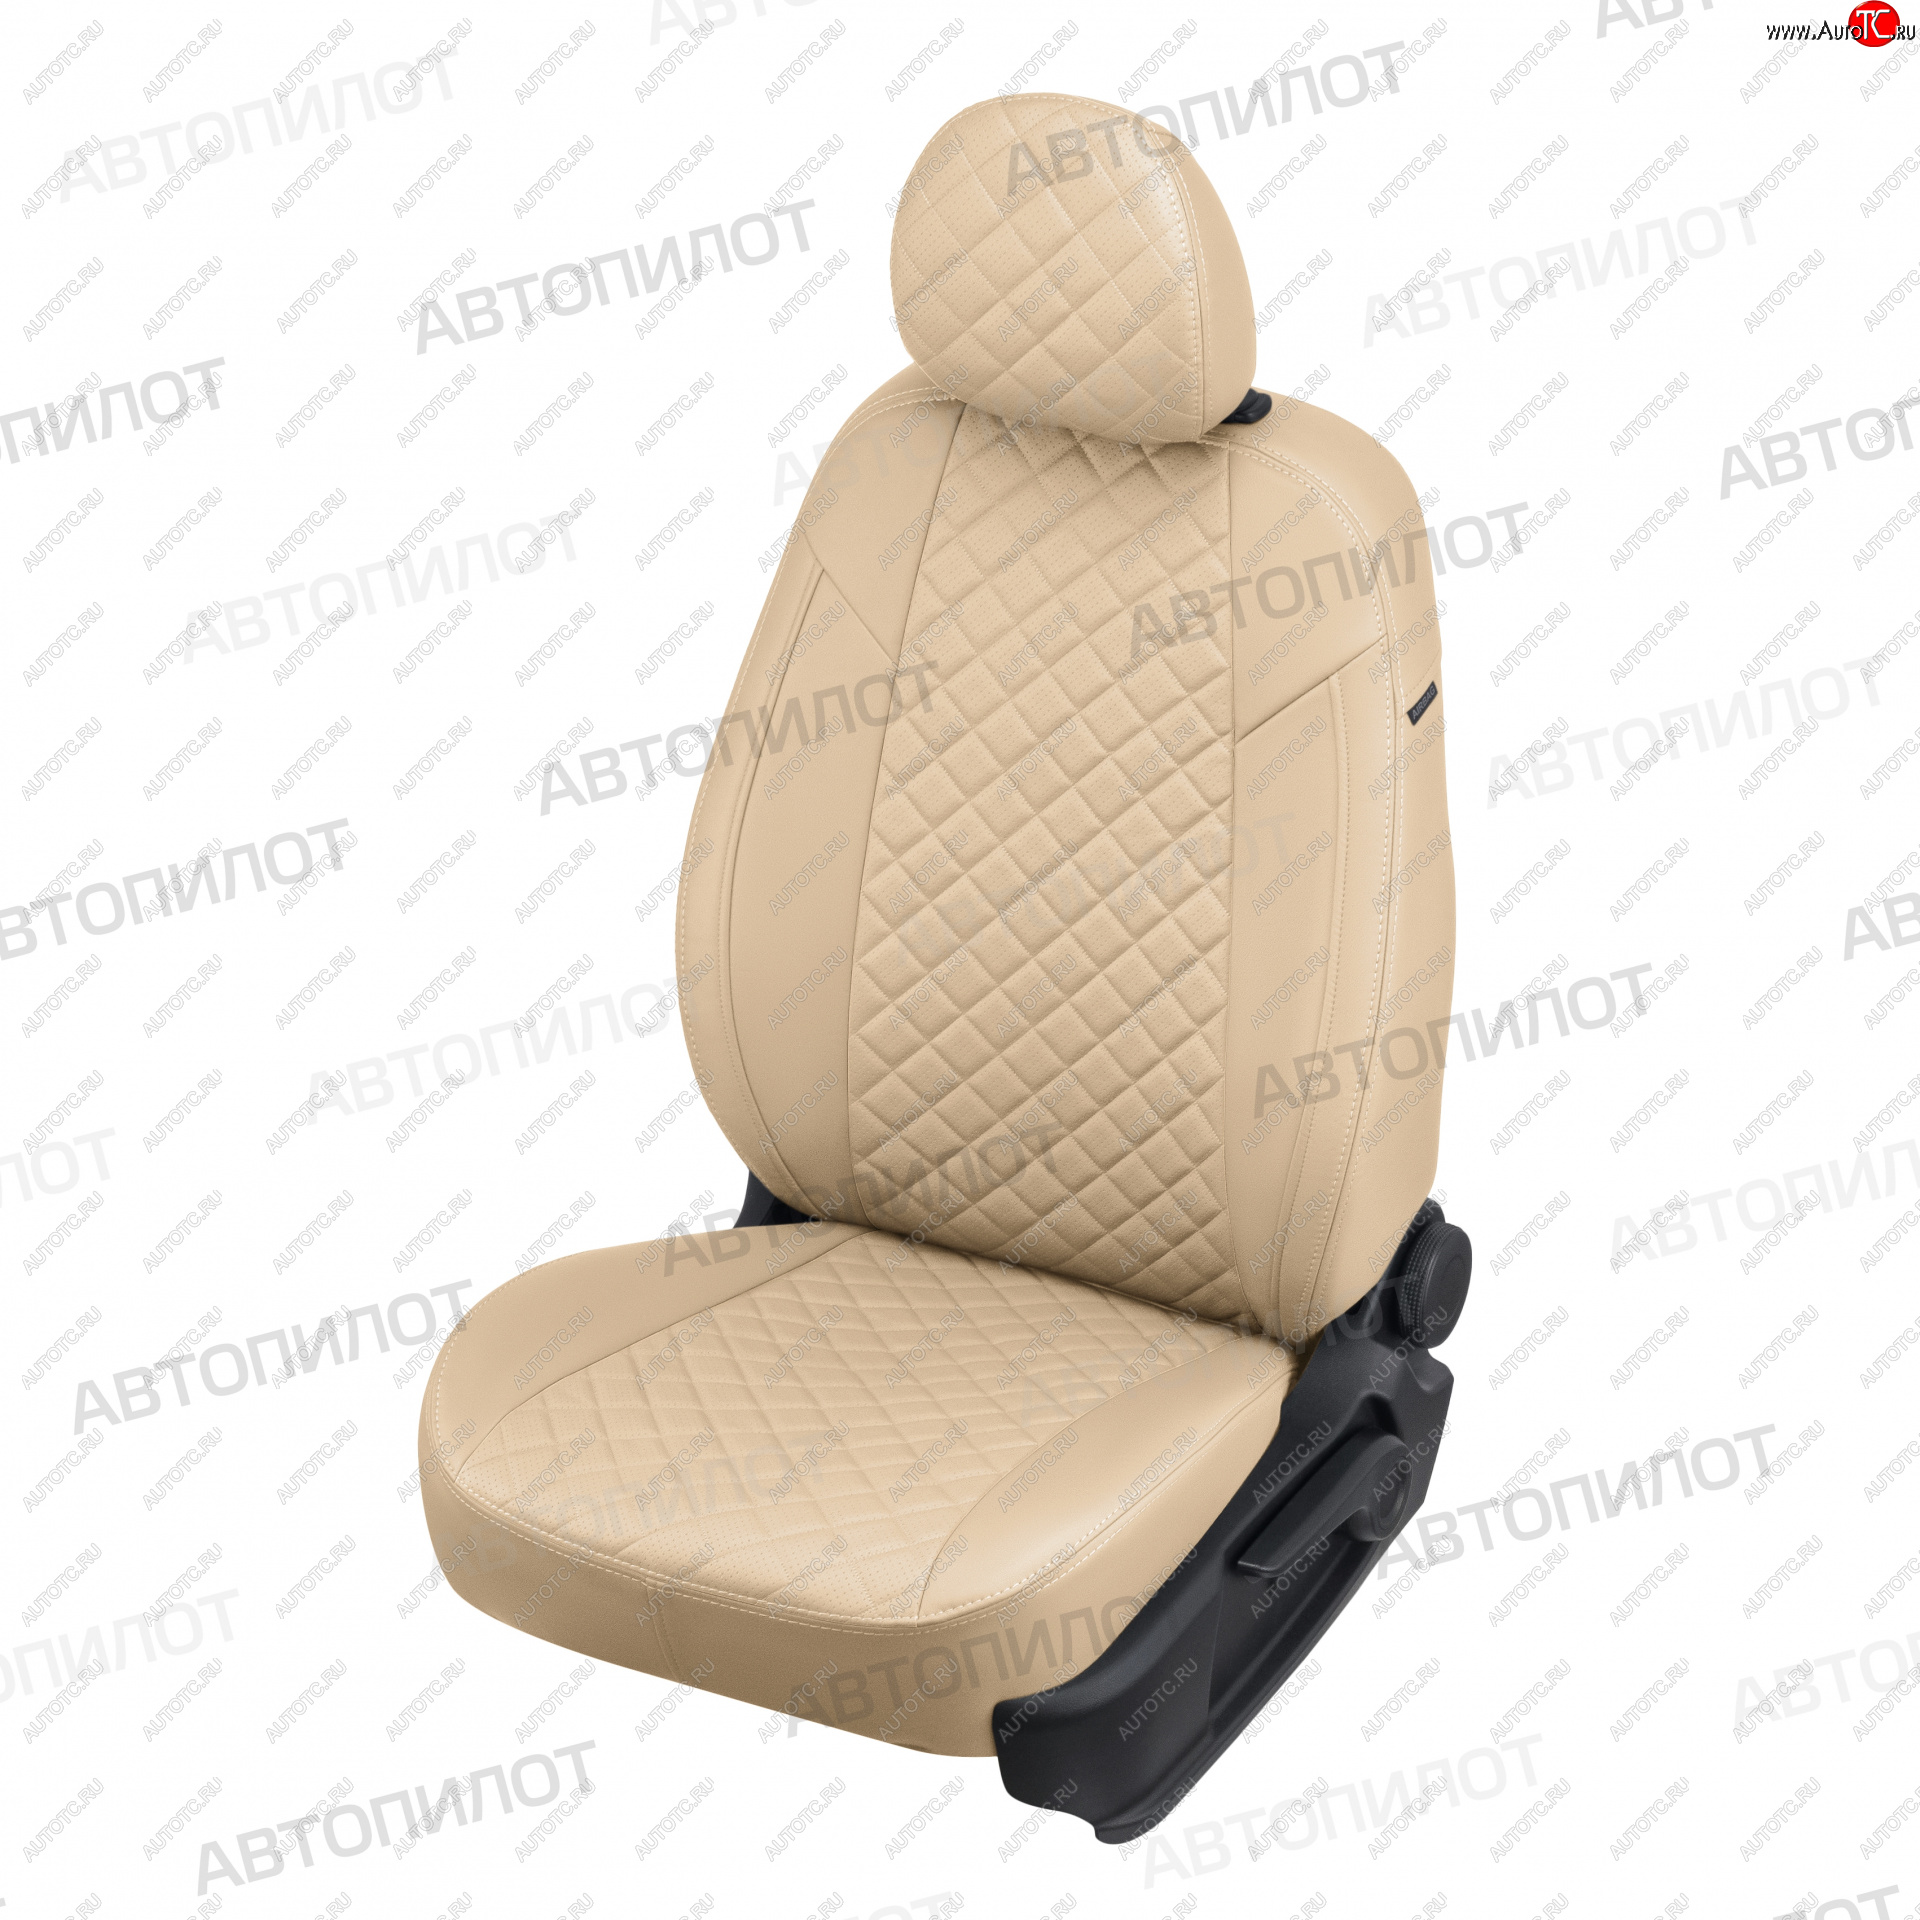 14 499 р. Чехлы сидений (экокожа) Автопилот Ромб Chevrolet Lacetti седан (2002-2013) (бежевый)